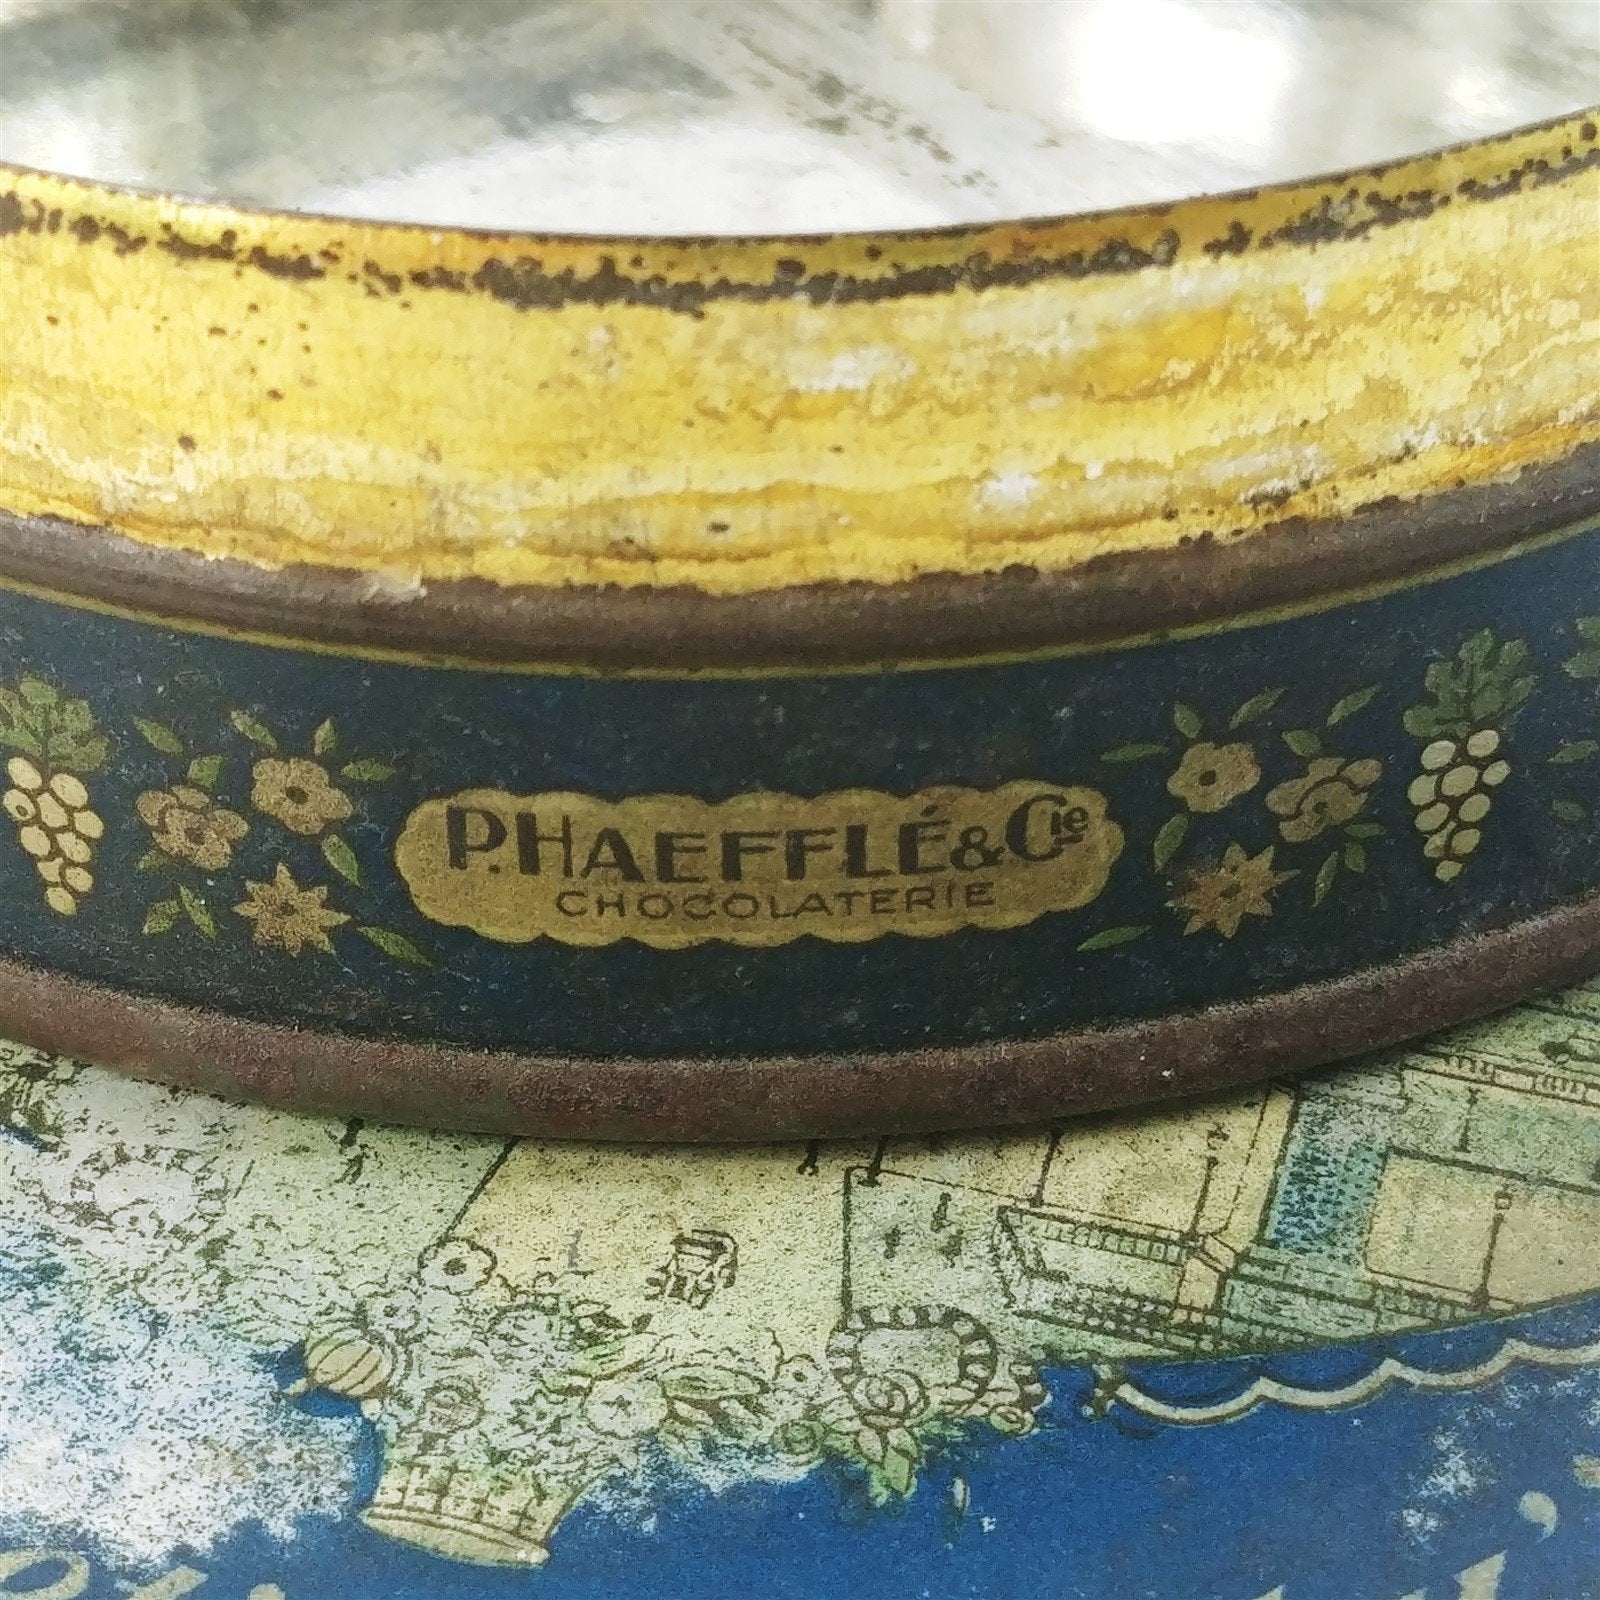 Advertising Tin with Lid by P. Haeffle Chocolaterie Specialte de Paris Vintage